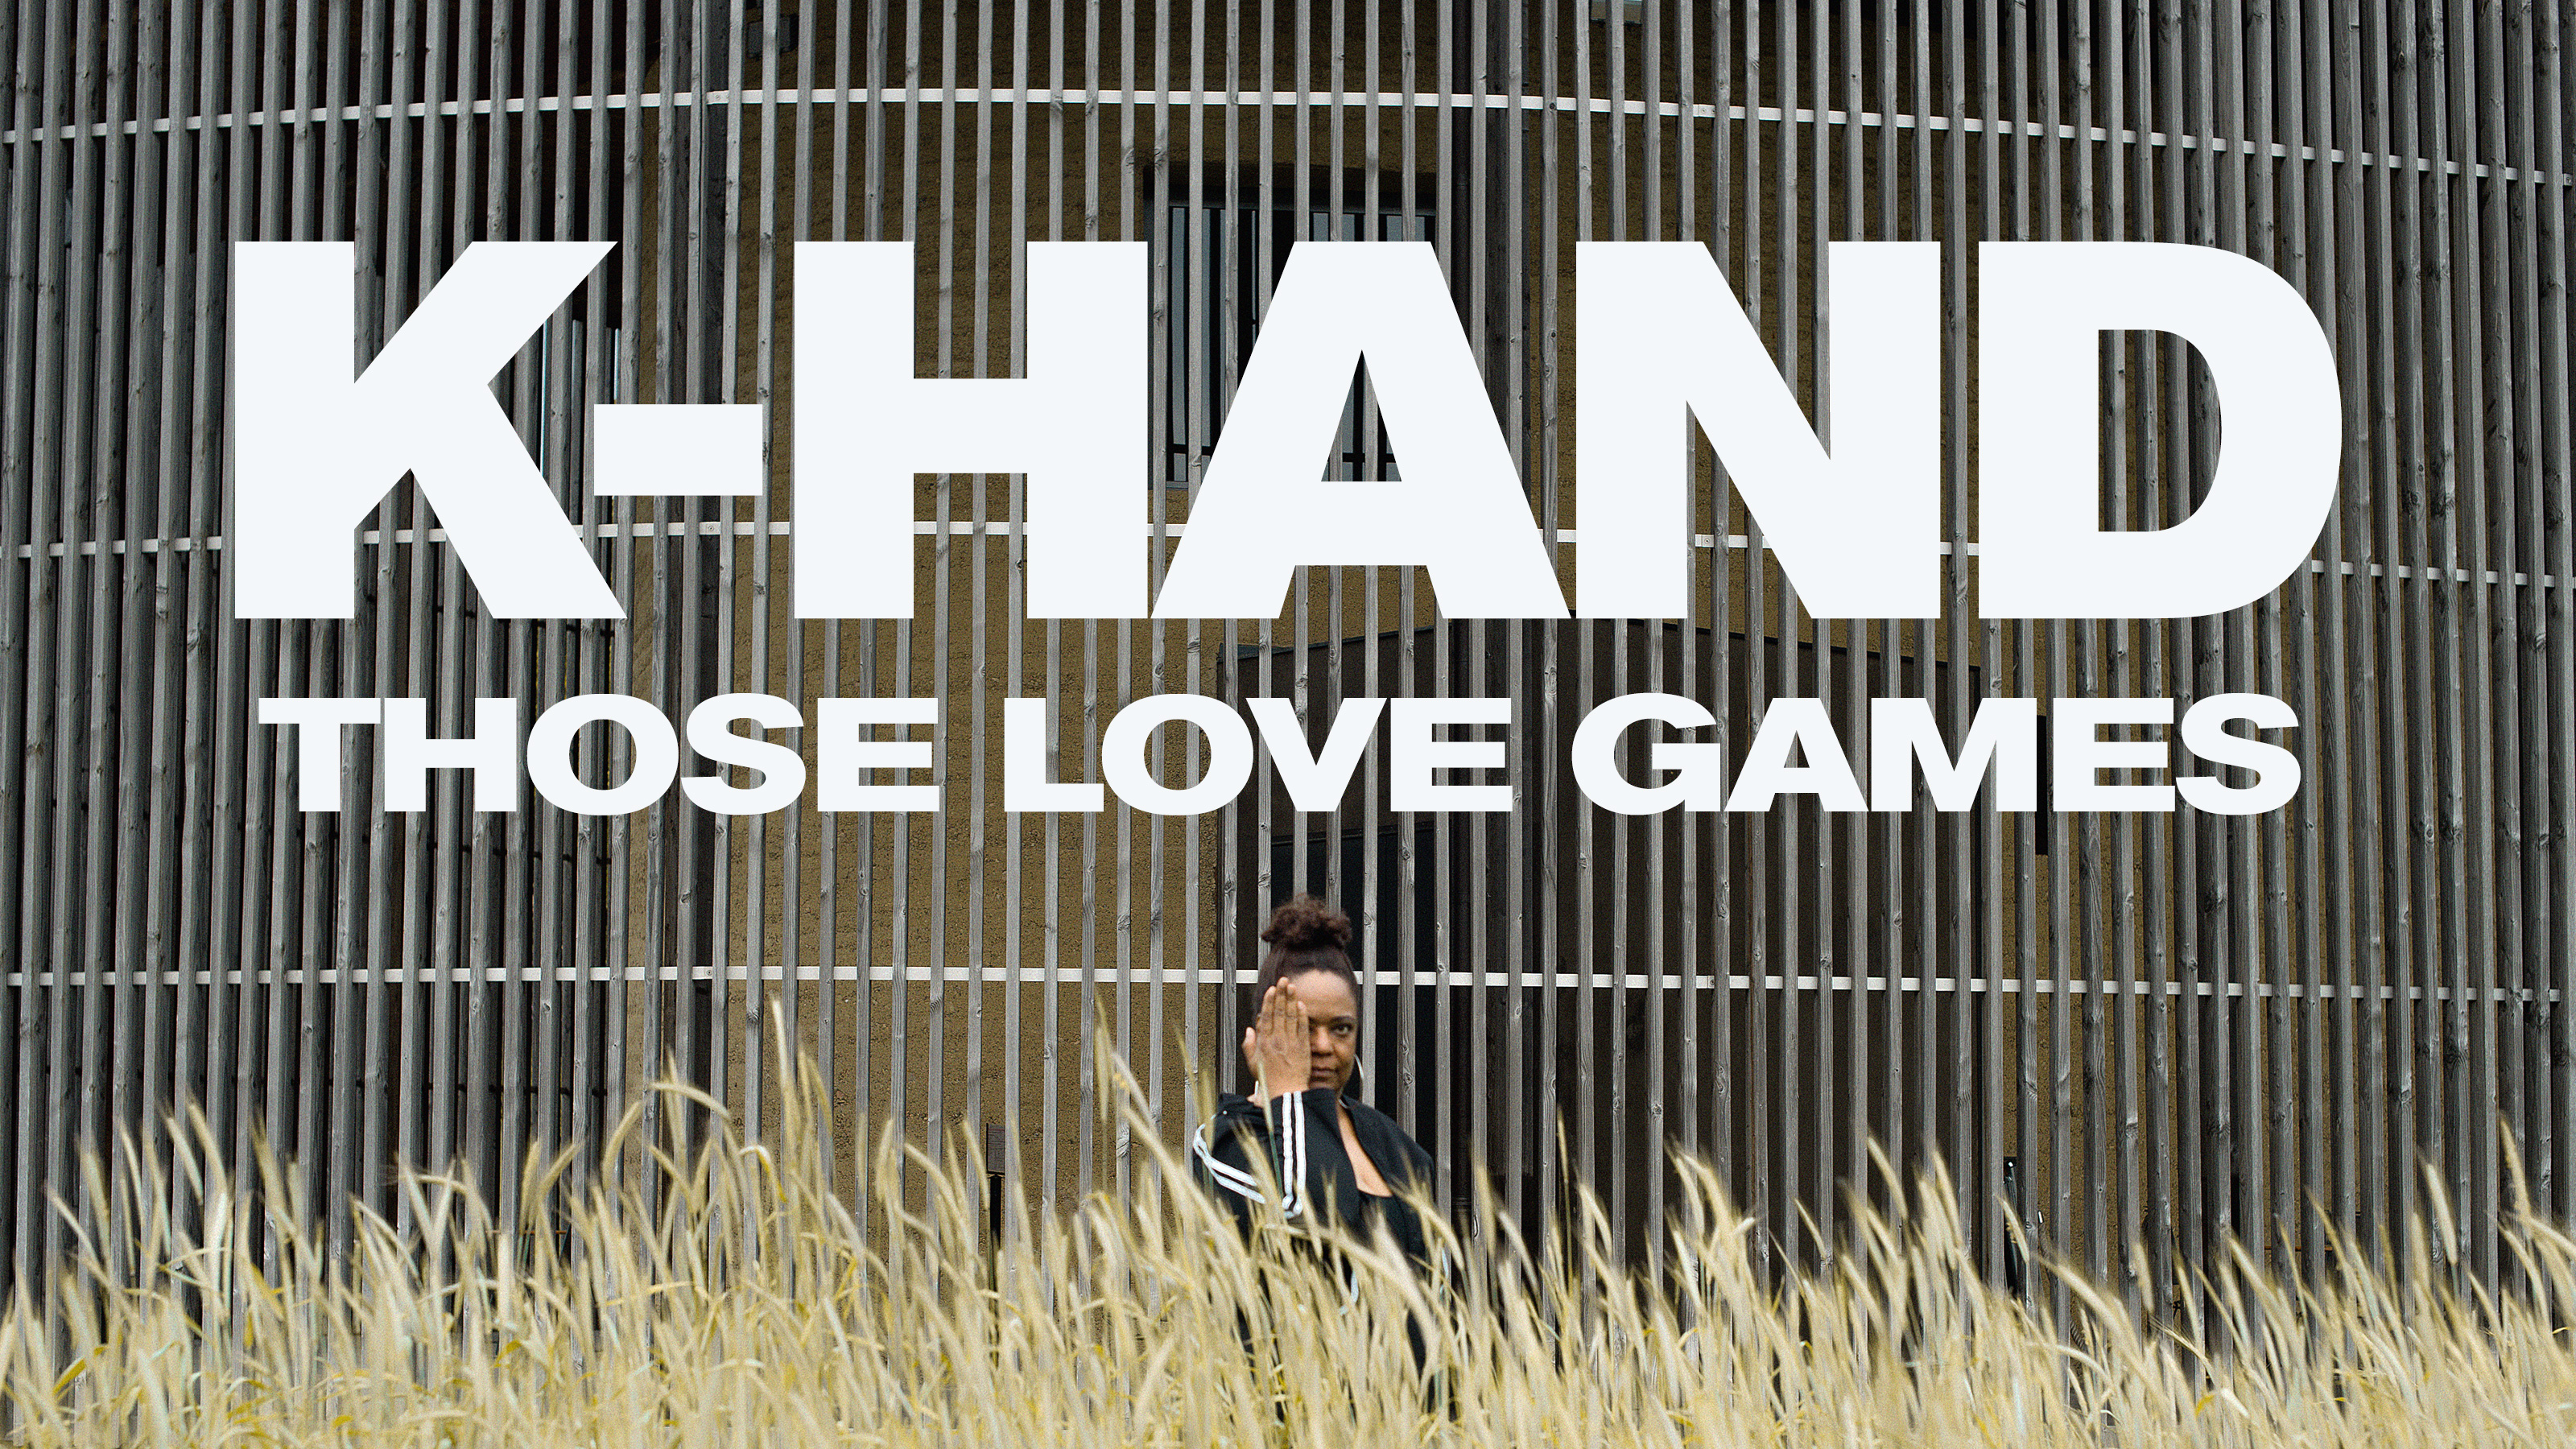 K-HAND: Those love games